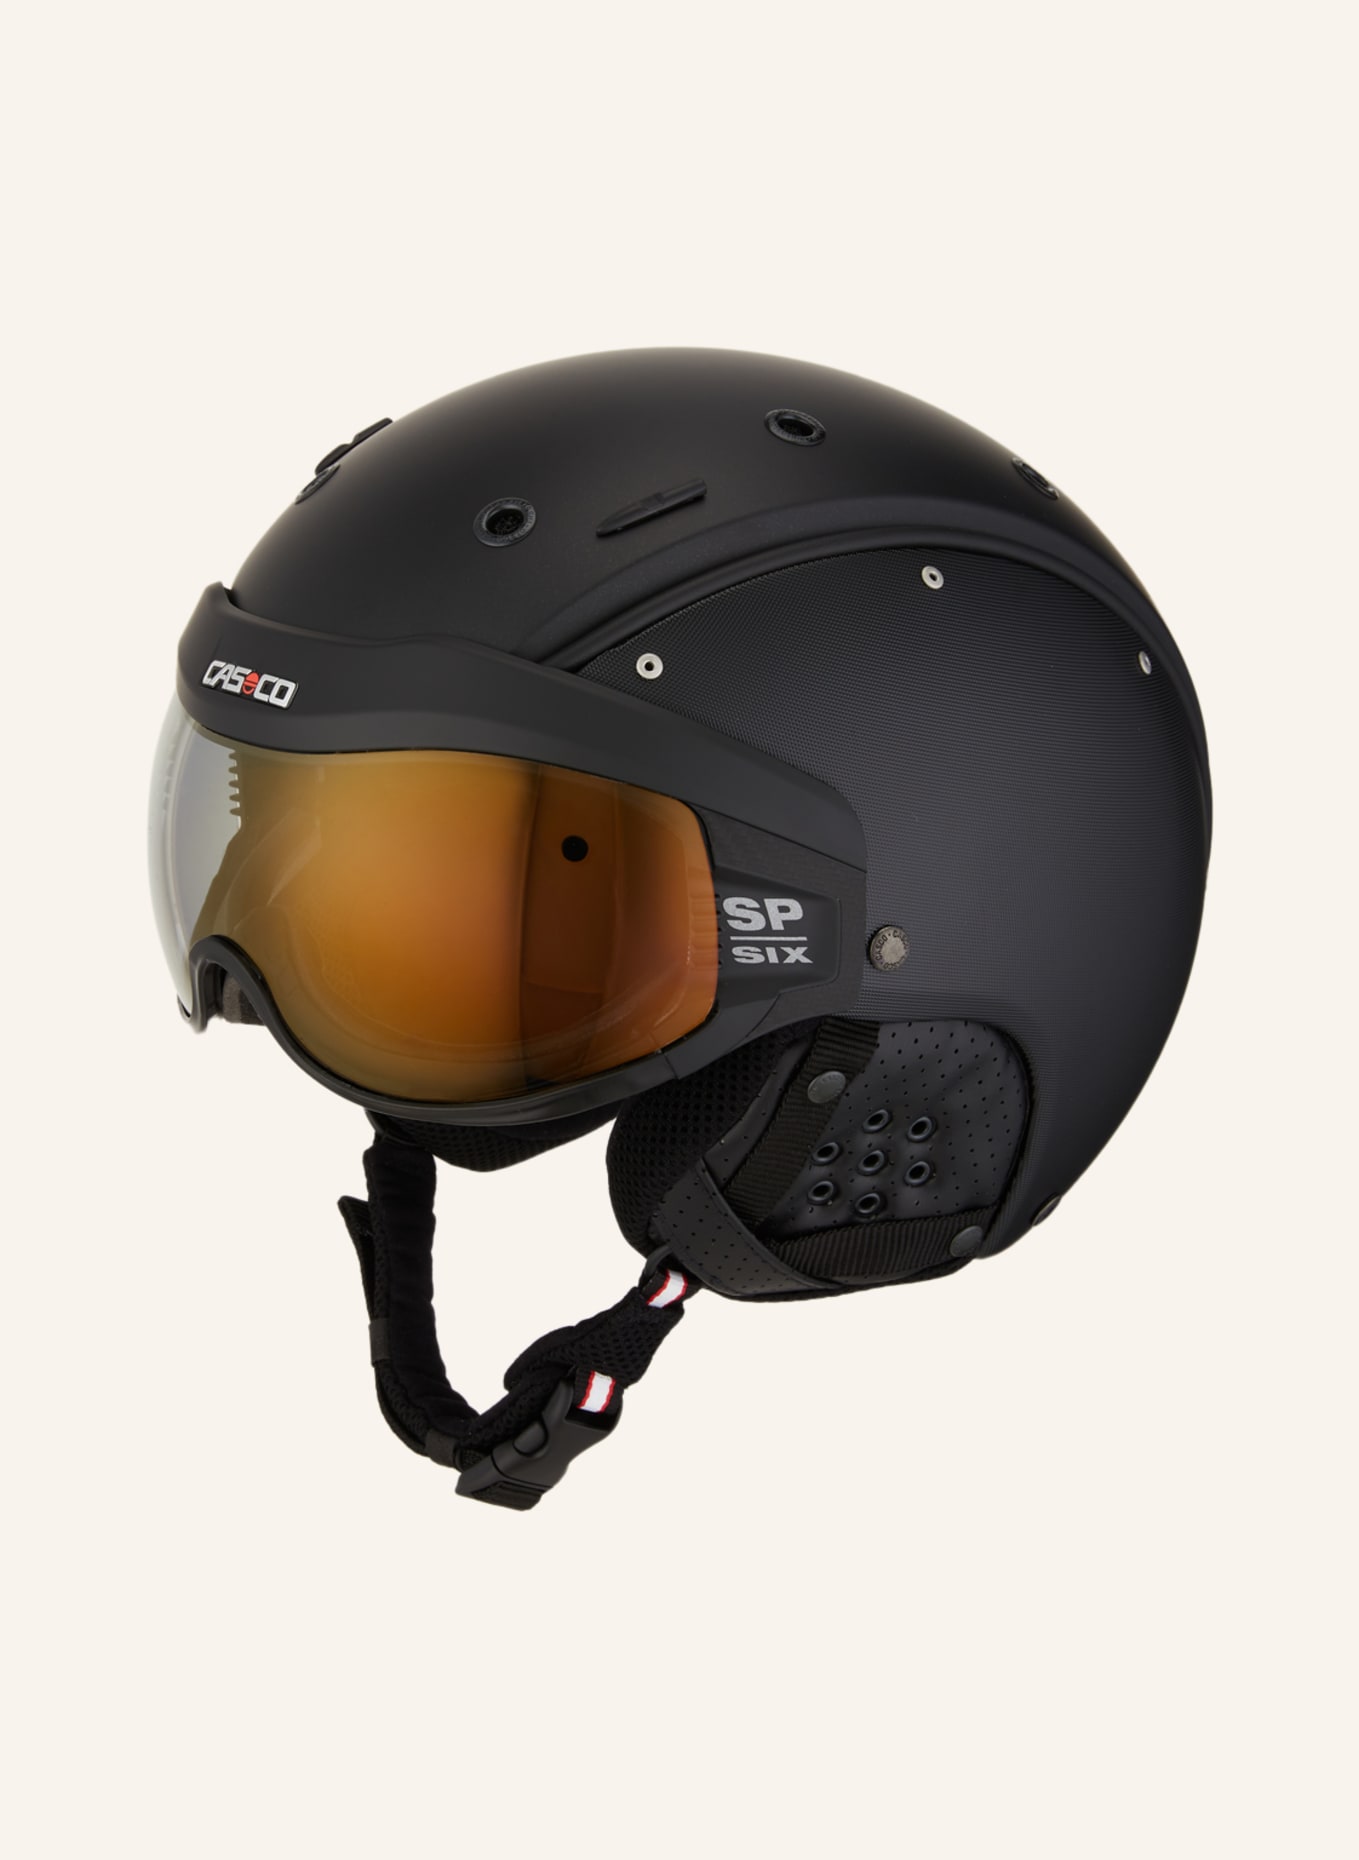 HEAD Ski helmet PORSCHE RADAR 5K PHOTO MIPS in black/ white/ gray